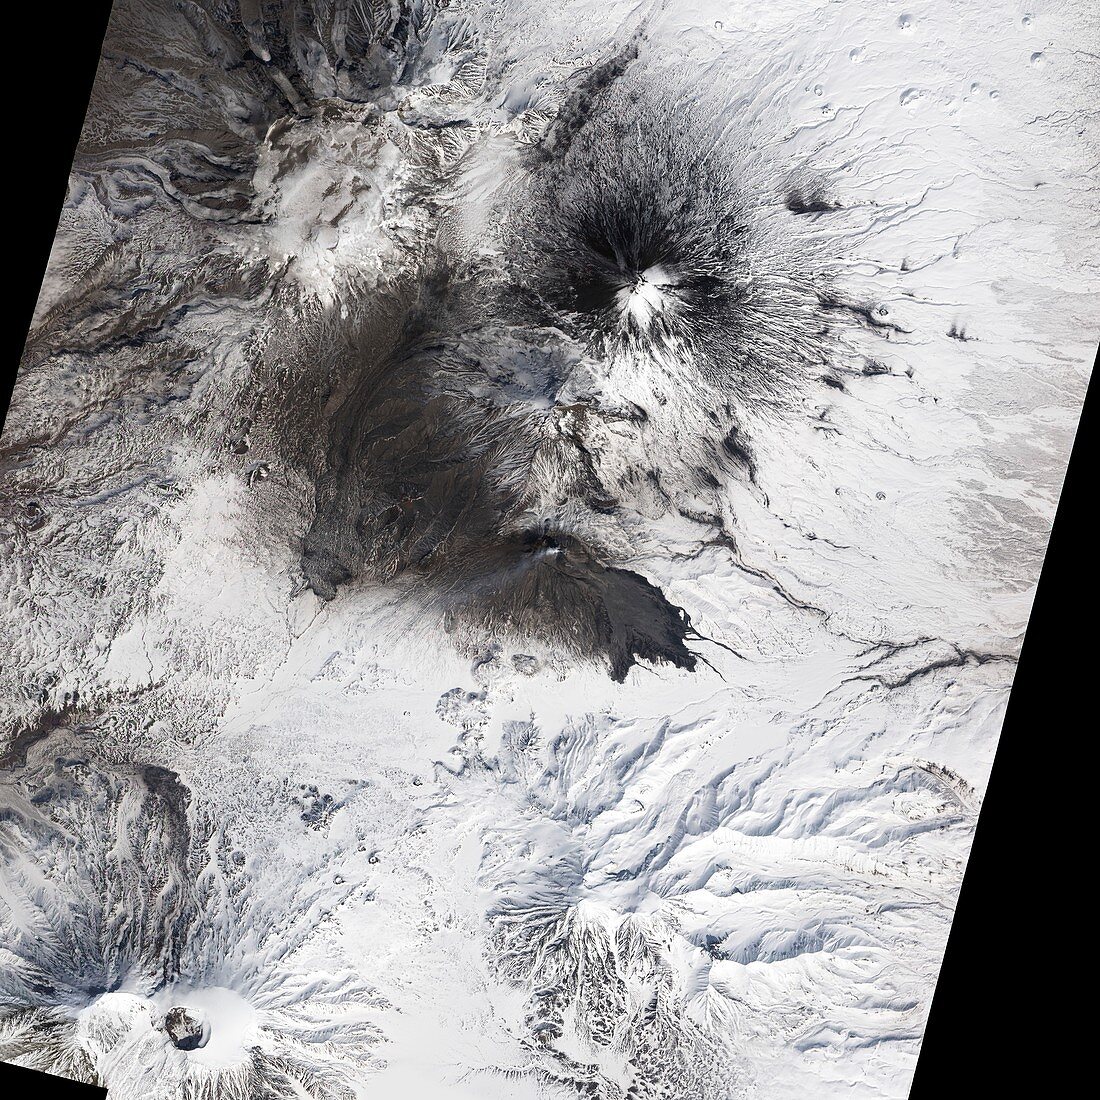 Bezymianny volcano,satellite image